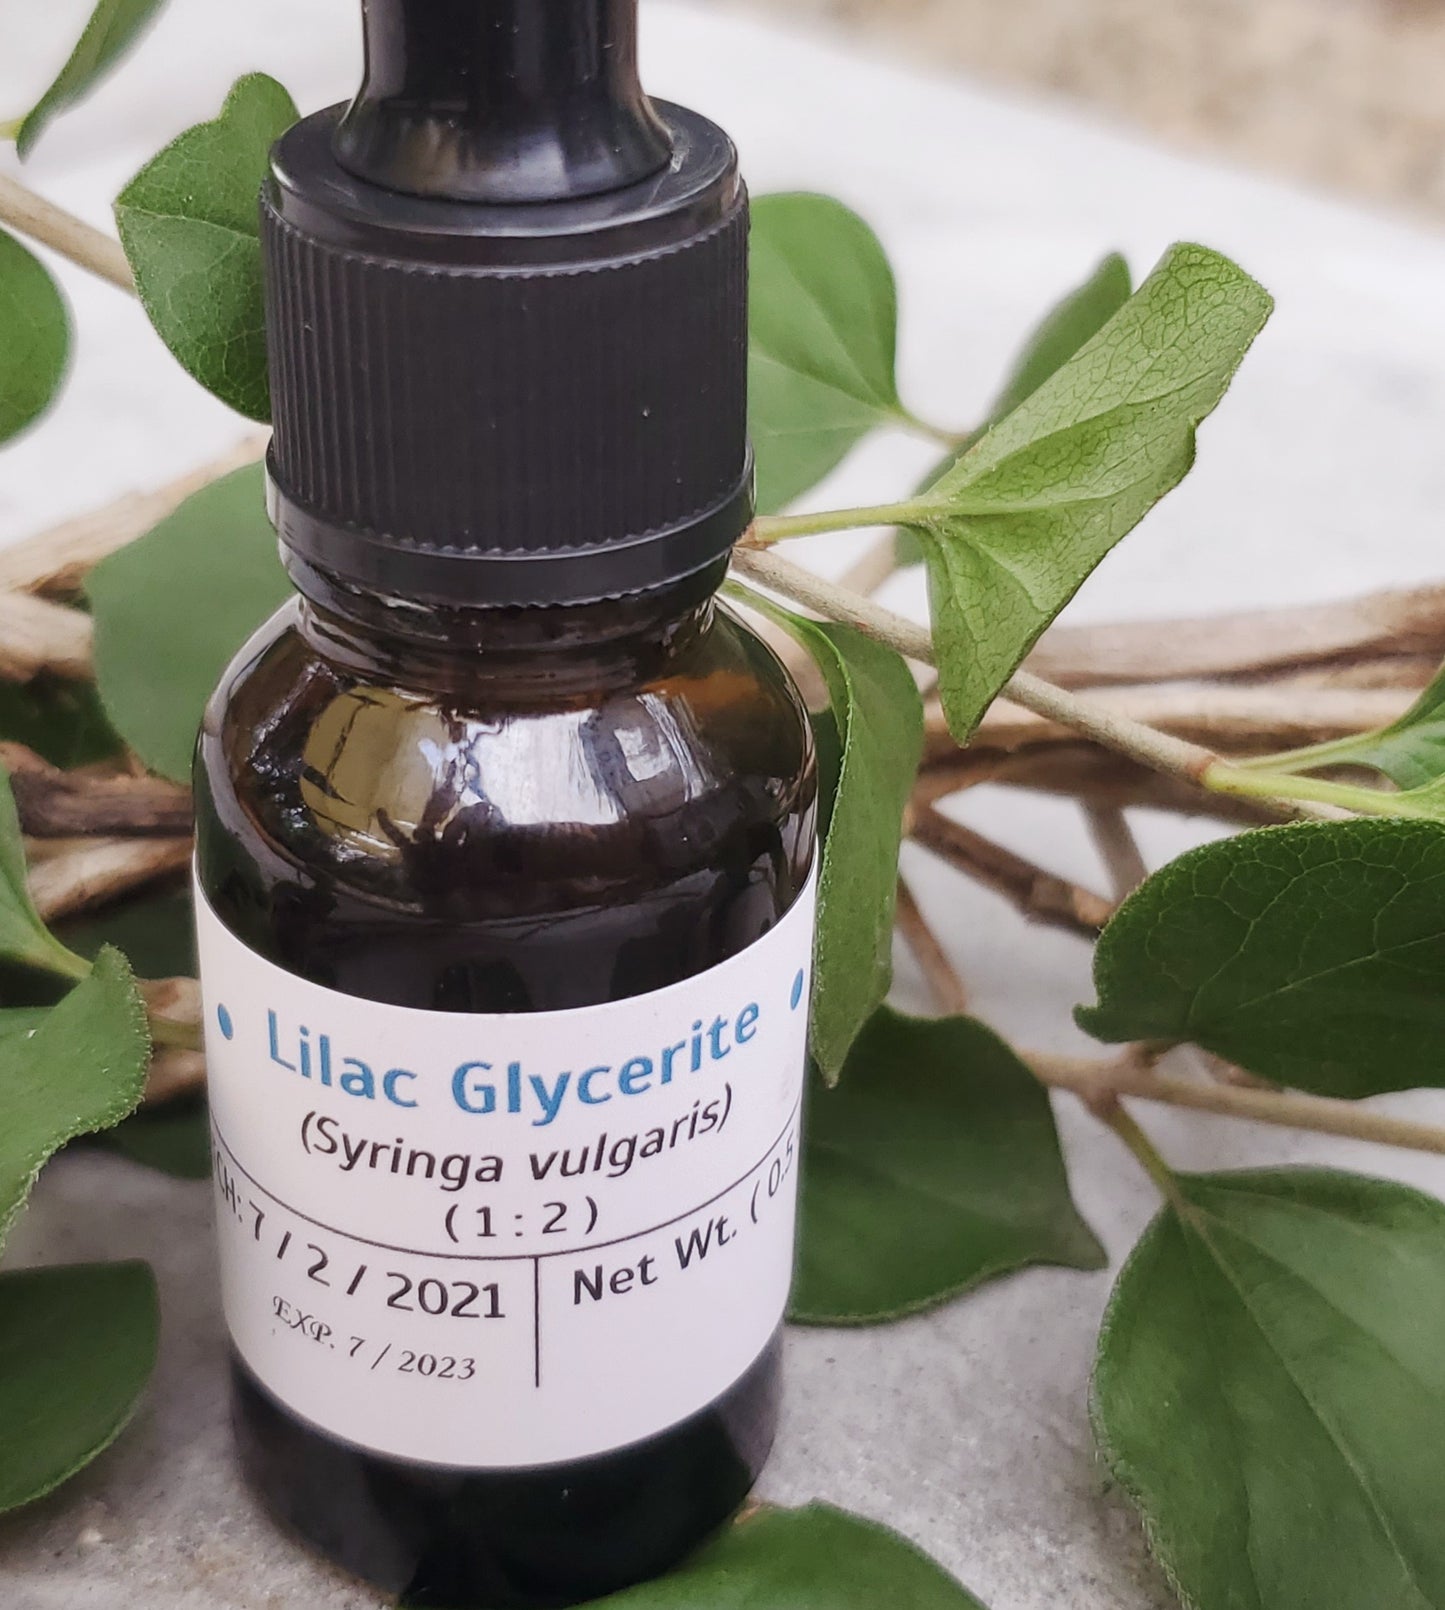 Lilac Glycerite (Syringa vulgaris)